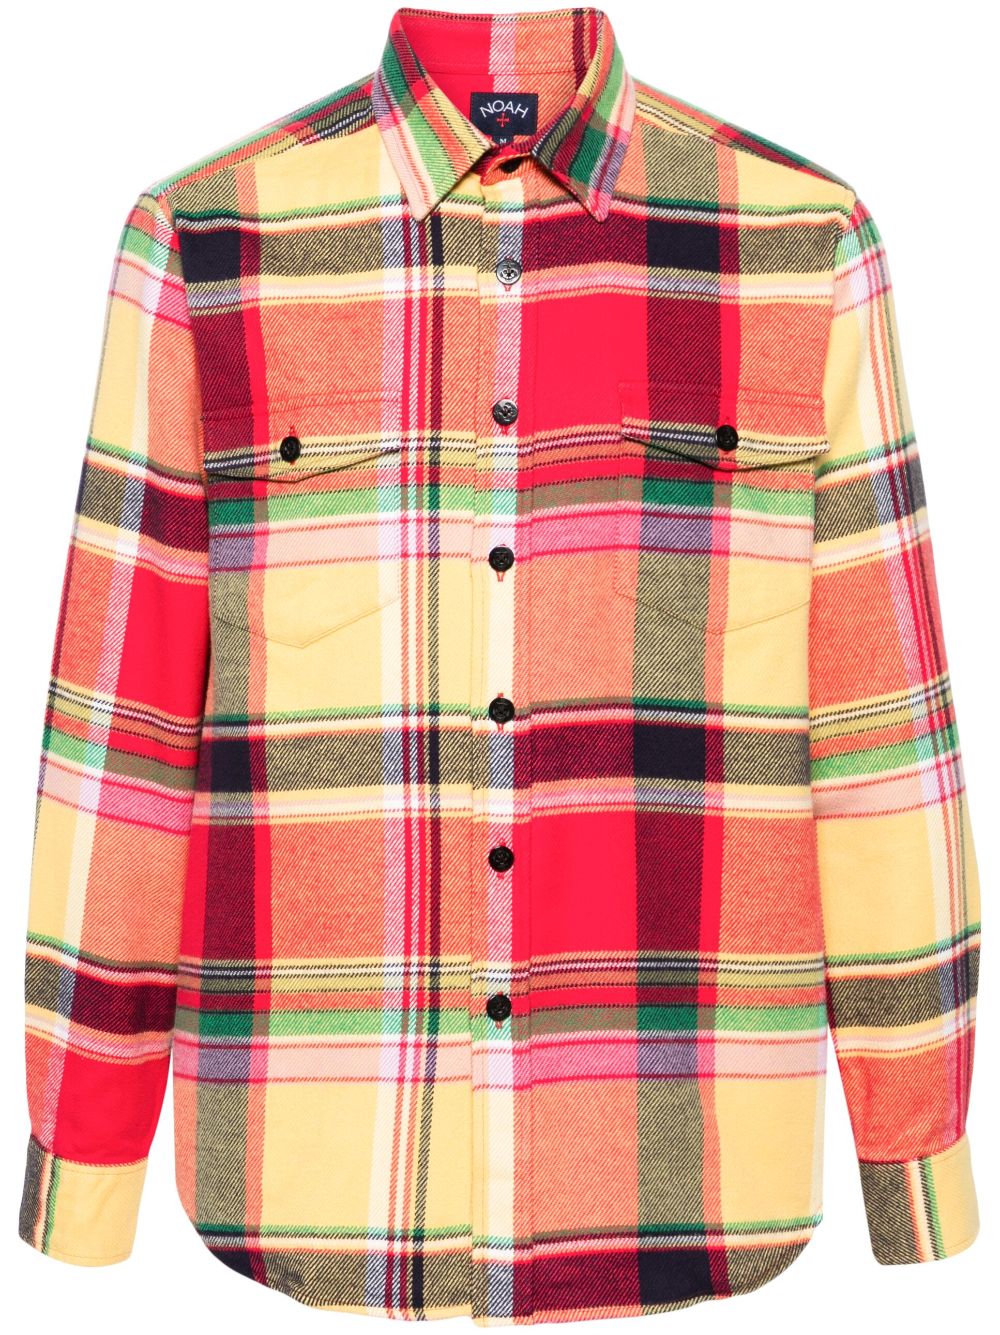 Heavyweight plaid-check flannel shirt